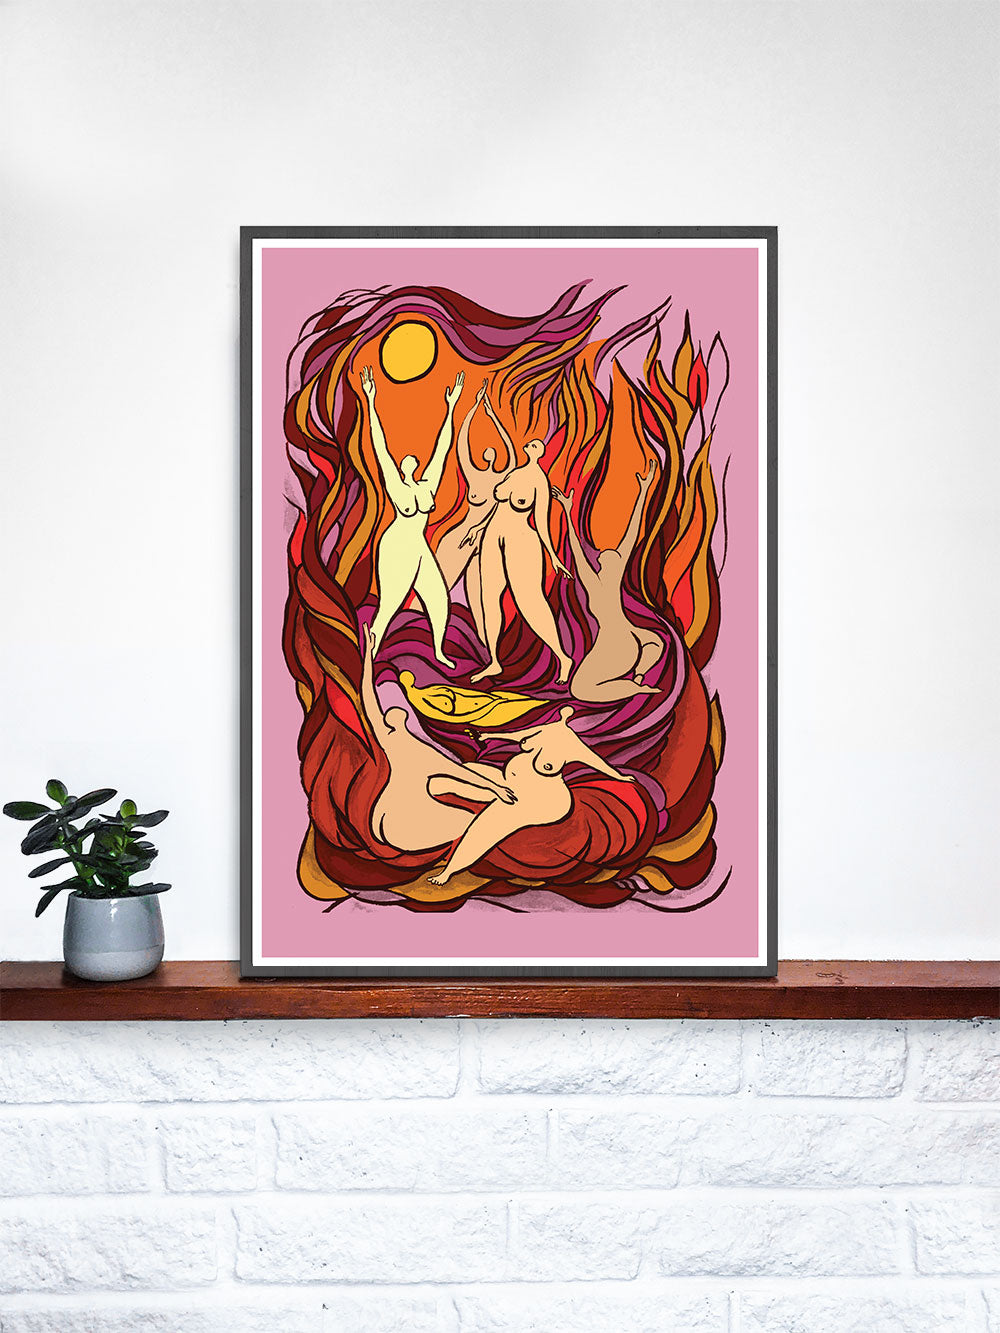 Full Moon Dancers Digital Illustration Art in a frame on a shelf